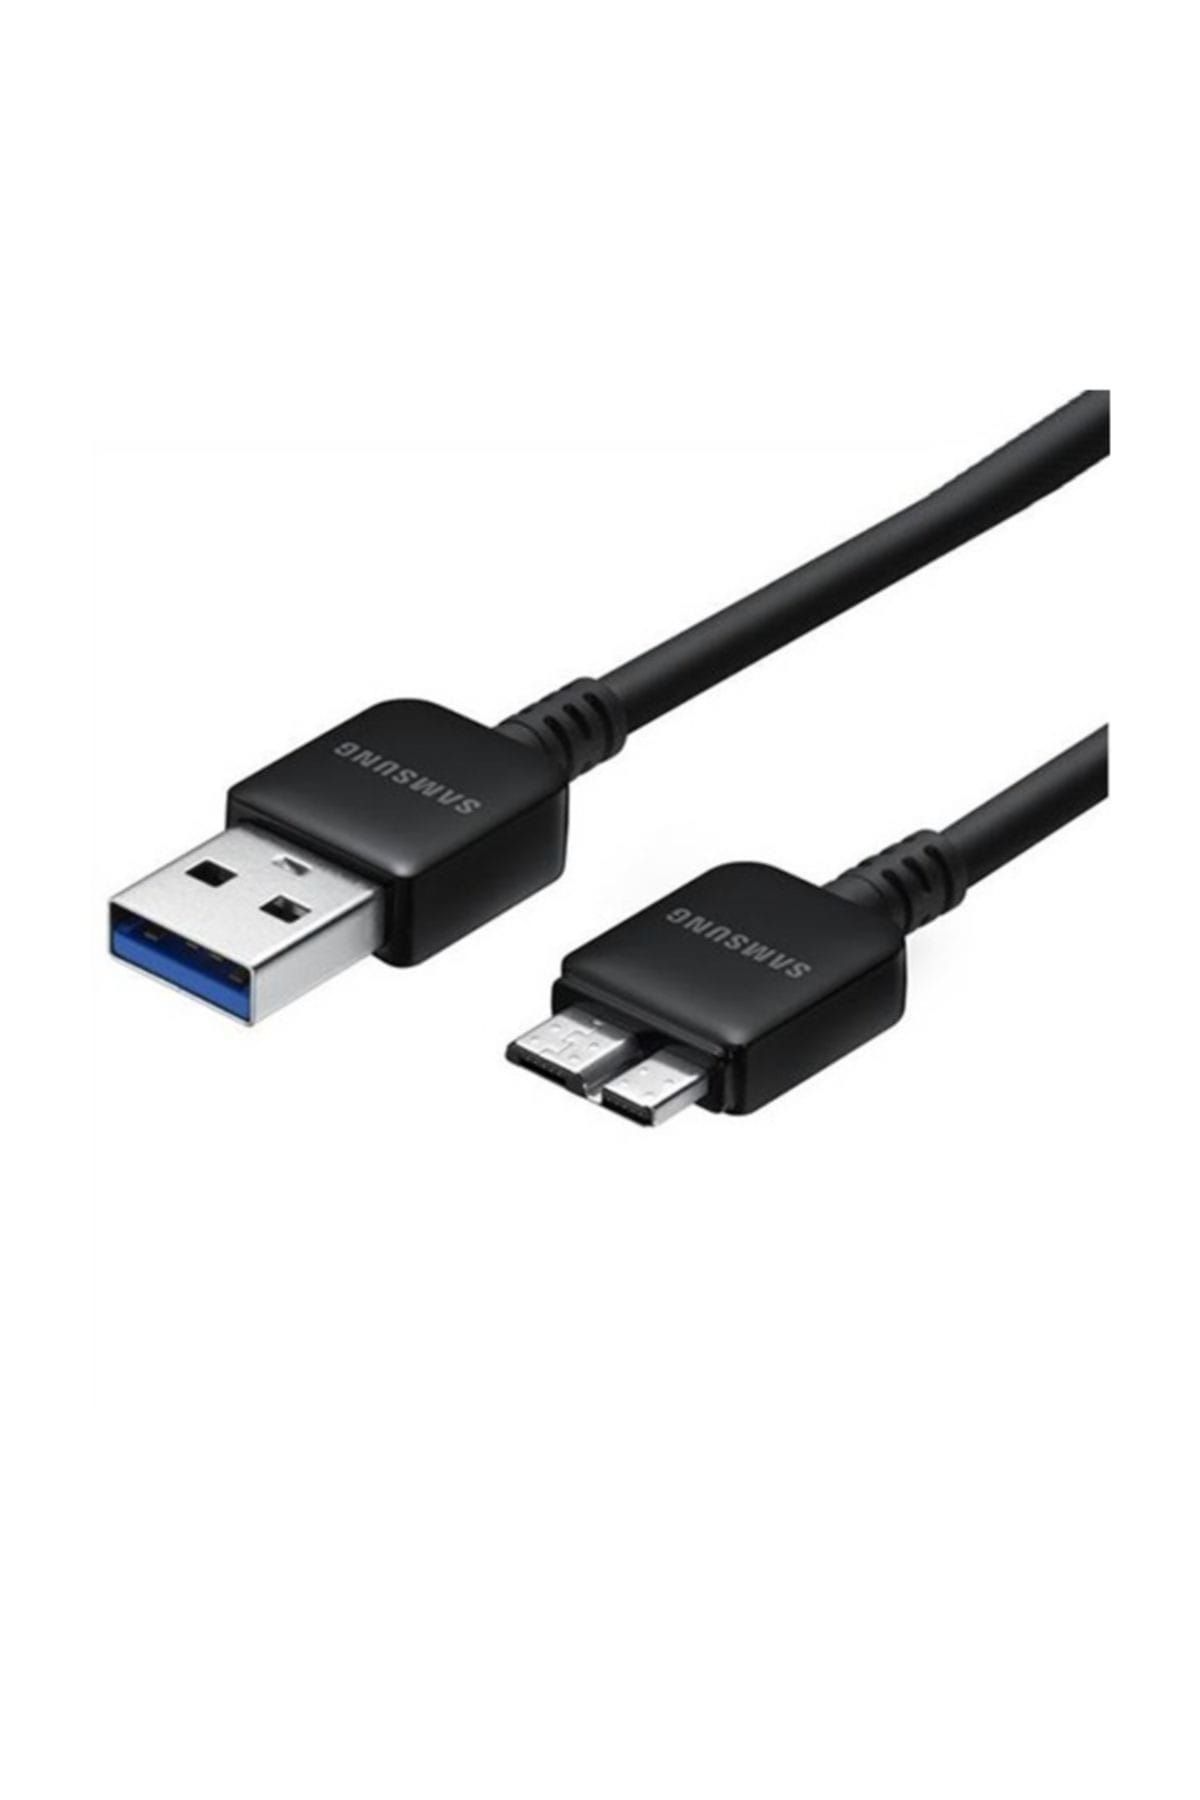 Note аксессуары. Кабель Samsung USB 3.0. Samsung 30pin charge Cable. 30 Pin Samsung кабель. Кабель для самсунга мама.